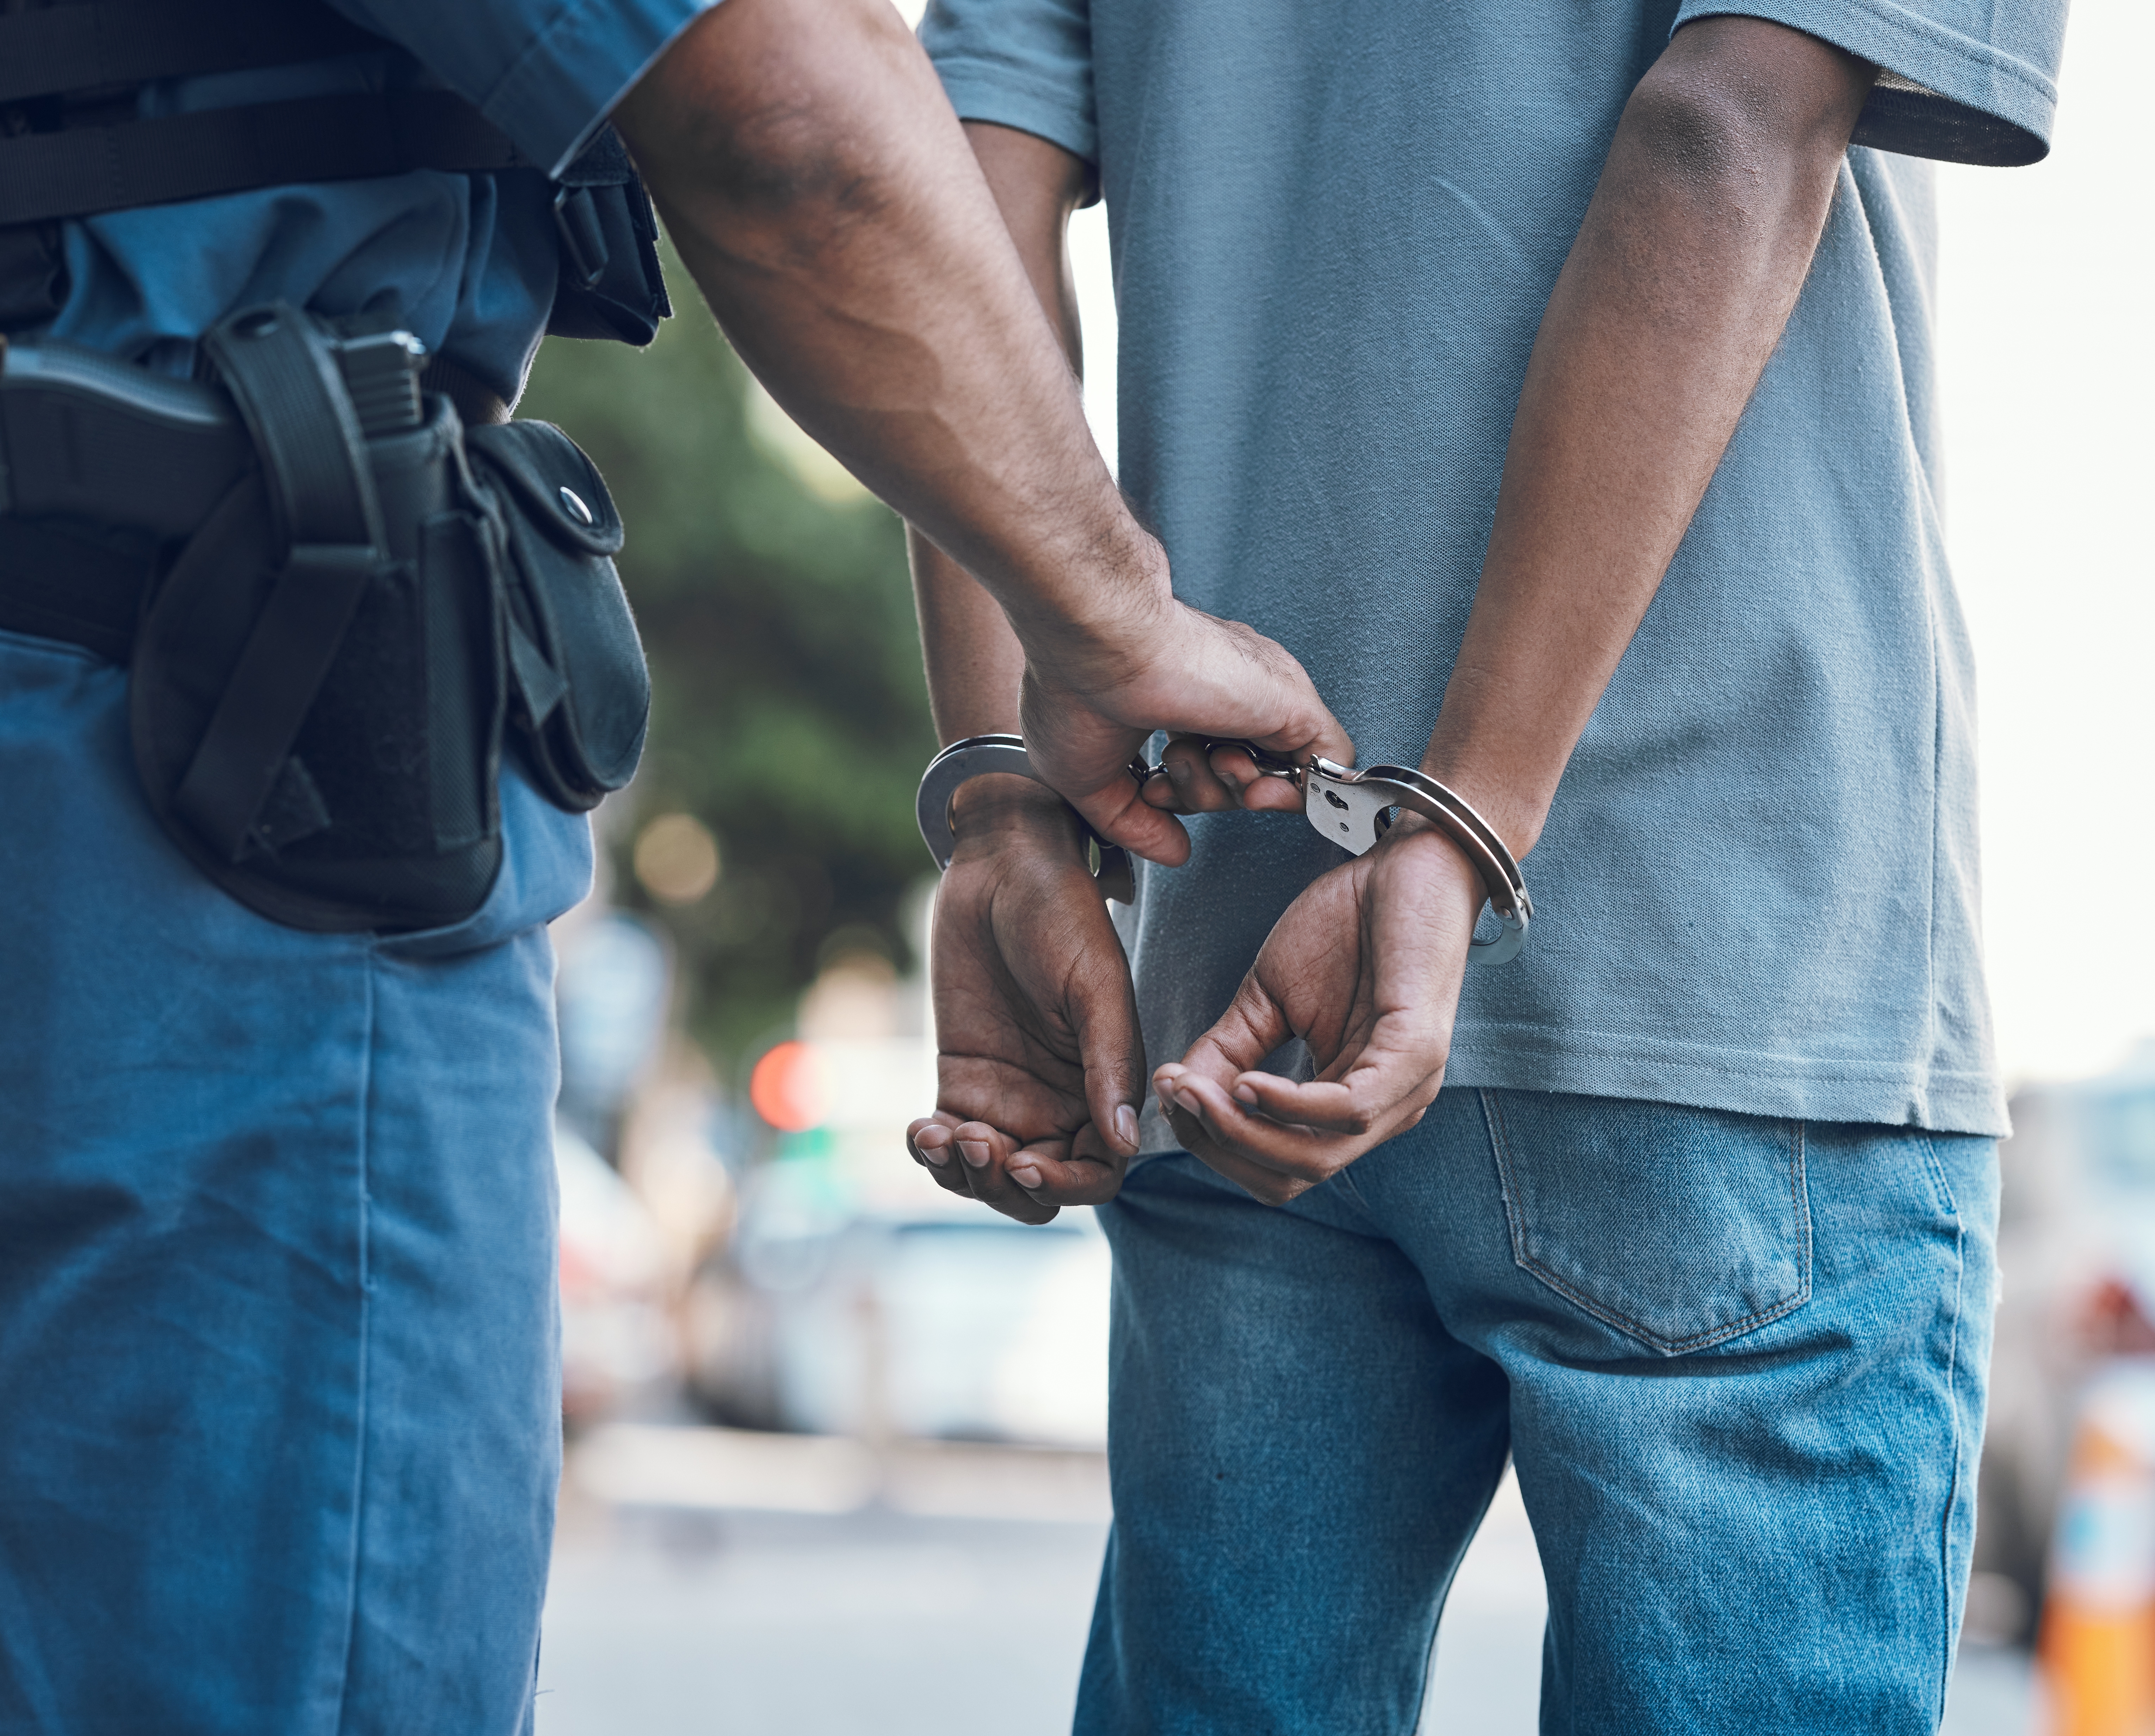 Arrest | Source: Shutterstock